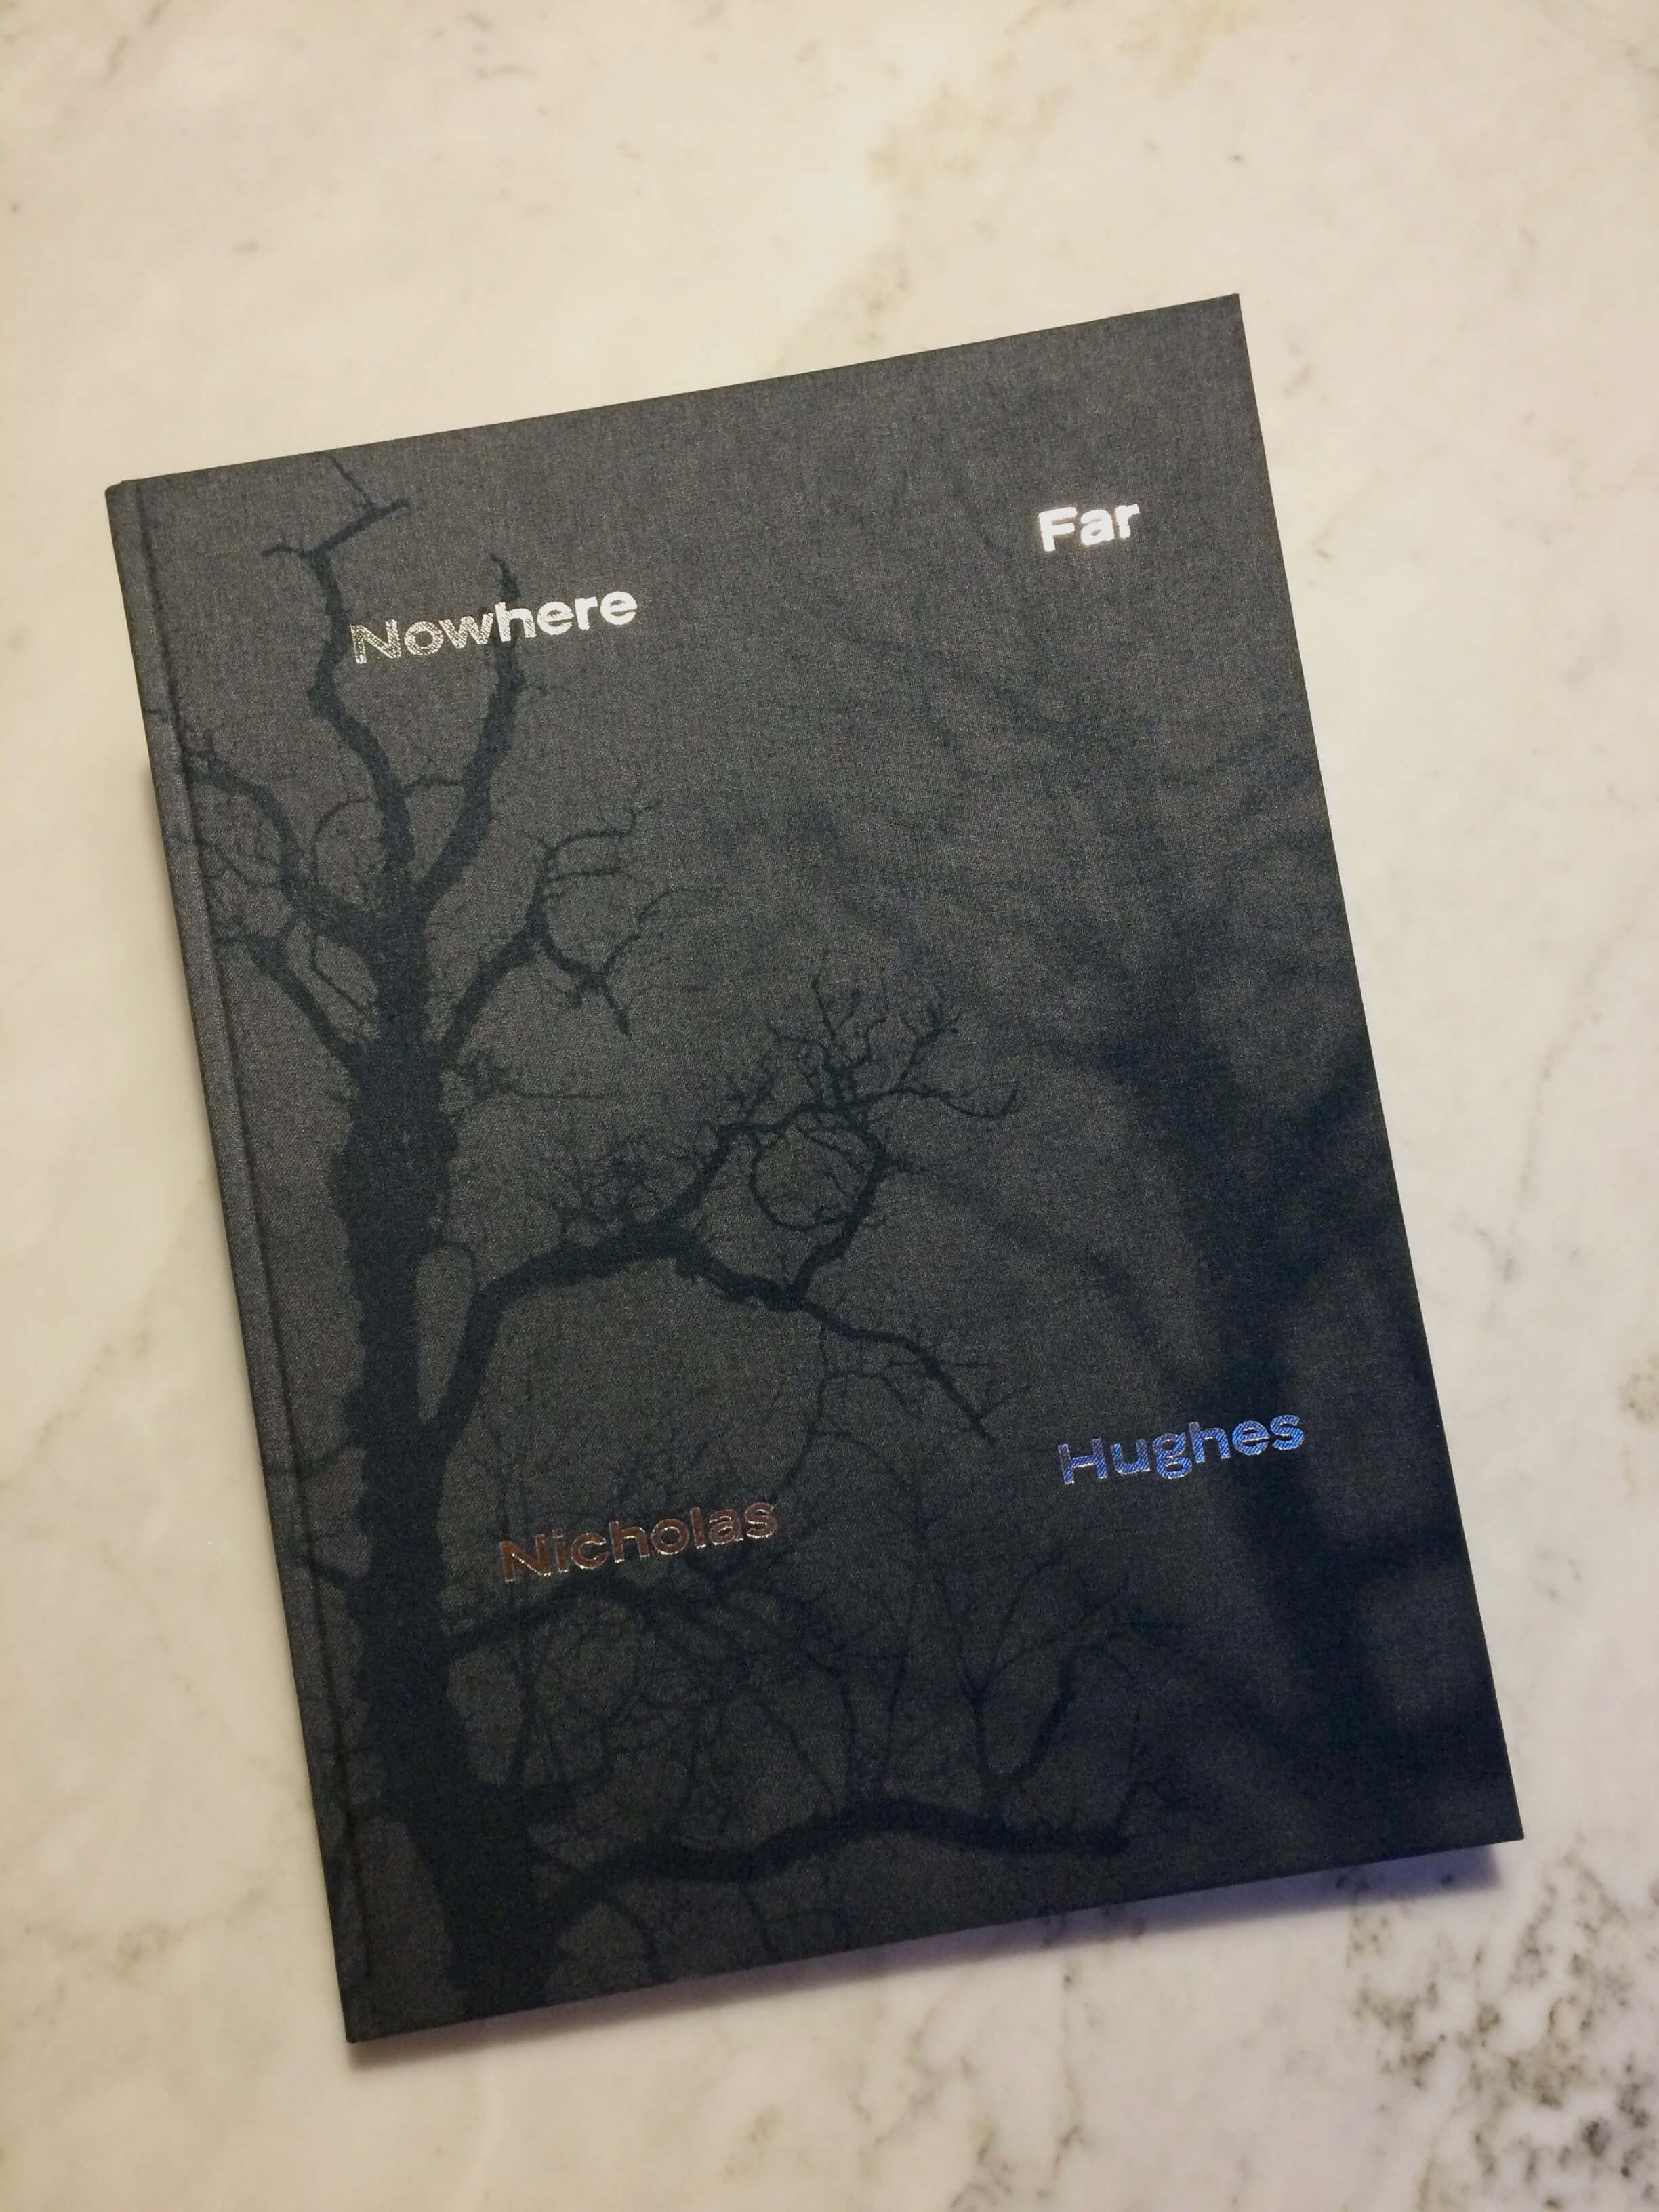 Nicholas Hughes, Nowher Far, photography book cover, Photography, Landscape